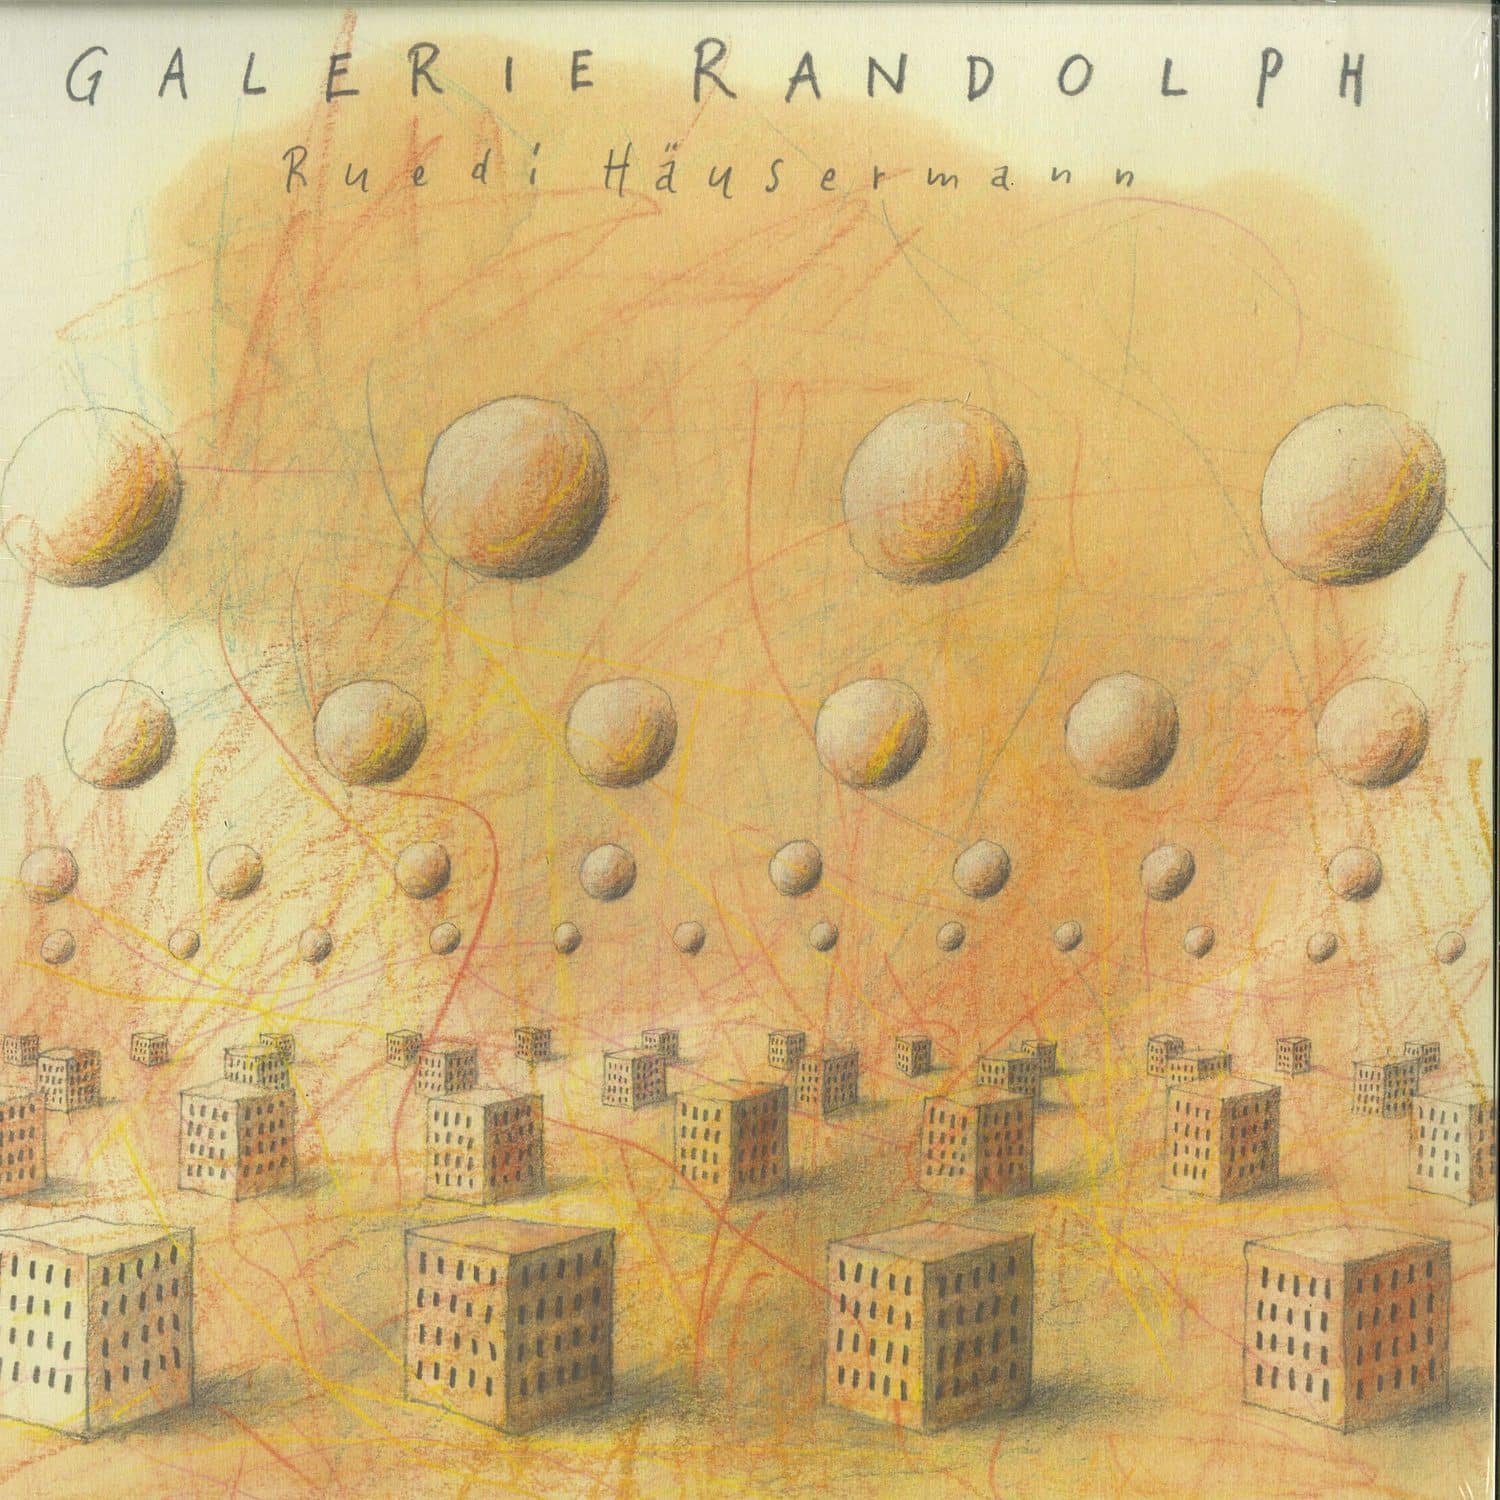 Ruedi Haeusermann - GALERIE RANDOLPH 